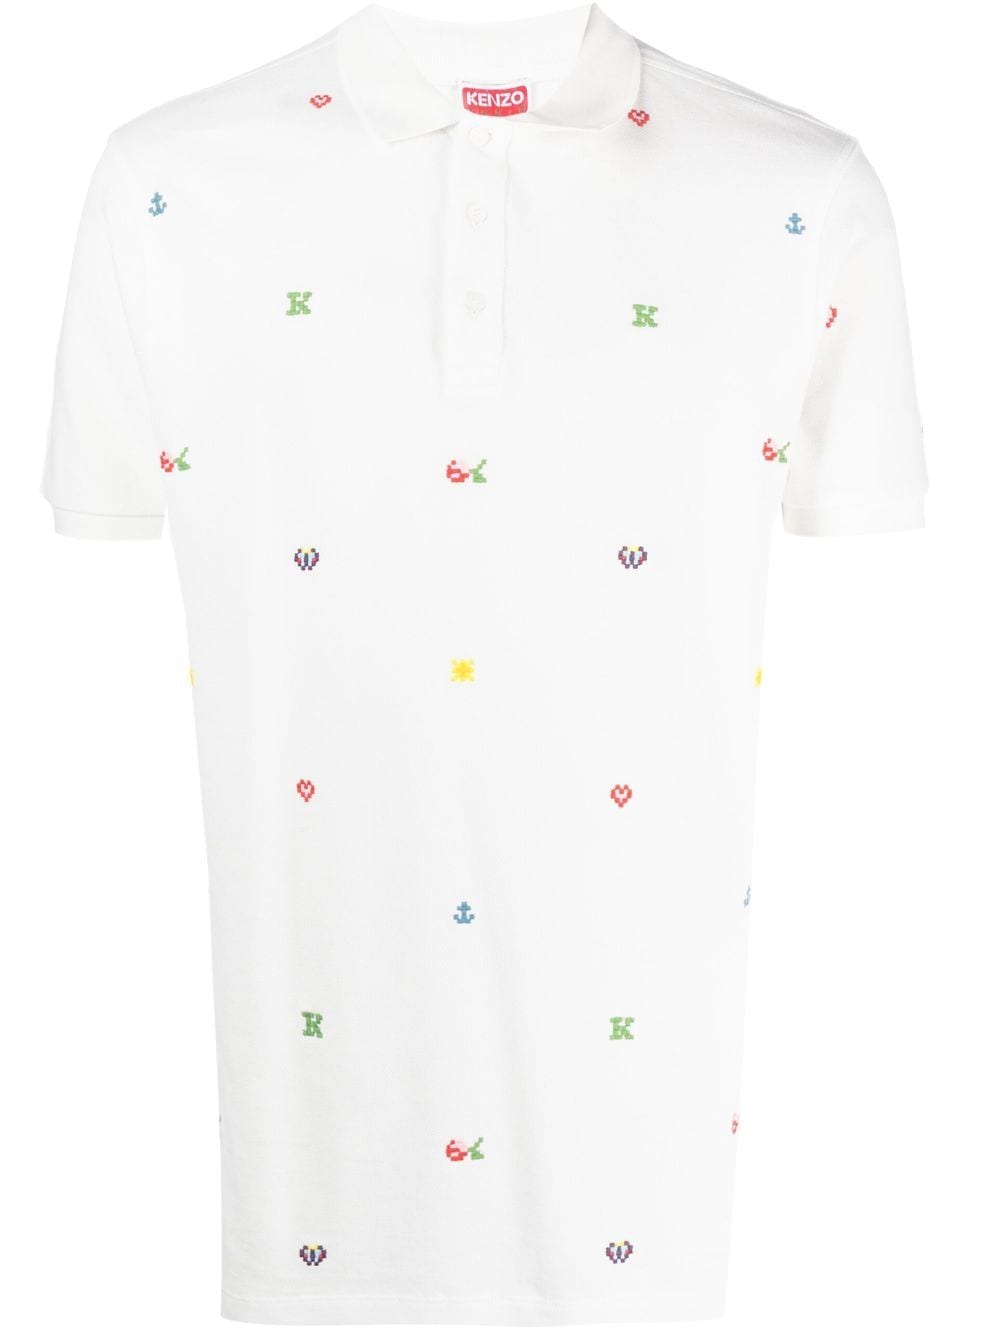 Kenzo Kenzo Pixel Slim Fit Polo Shirt - Farfetch